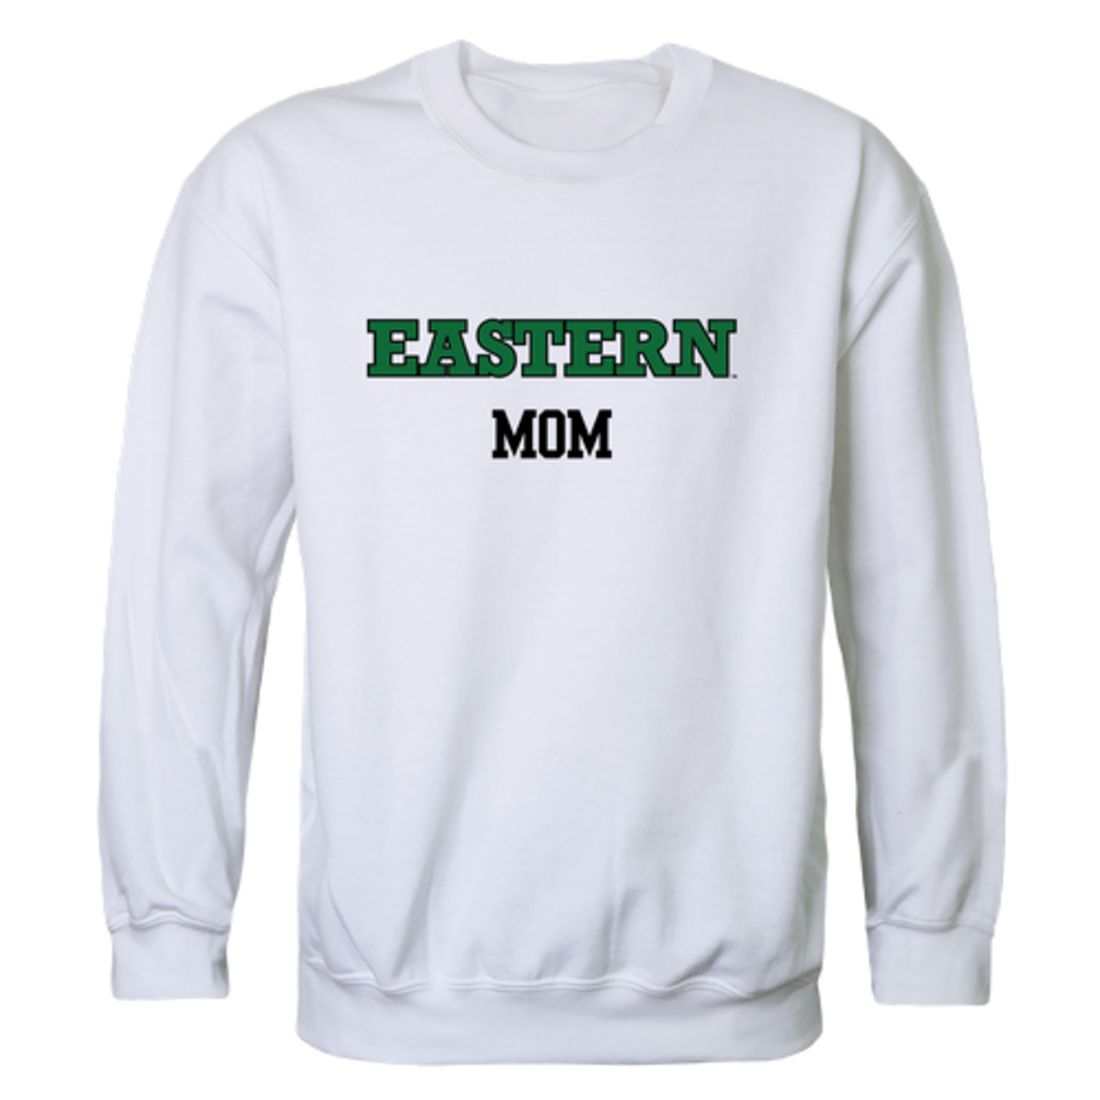 EMU Eastern Michigan University Eagles Mom Fleece Crewneck Pullover Sweatshirt Heather Charcoal Small-Campus-Wardrobe